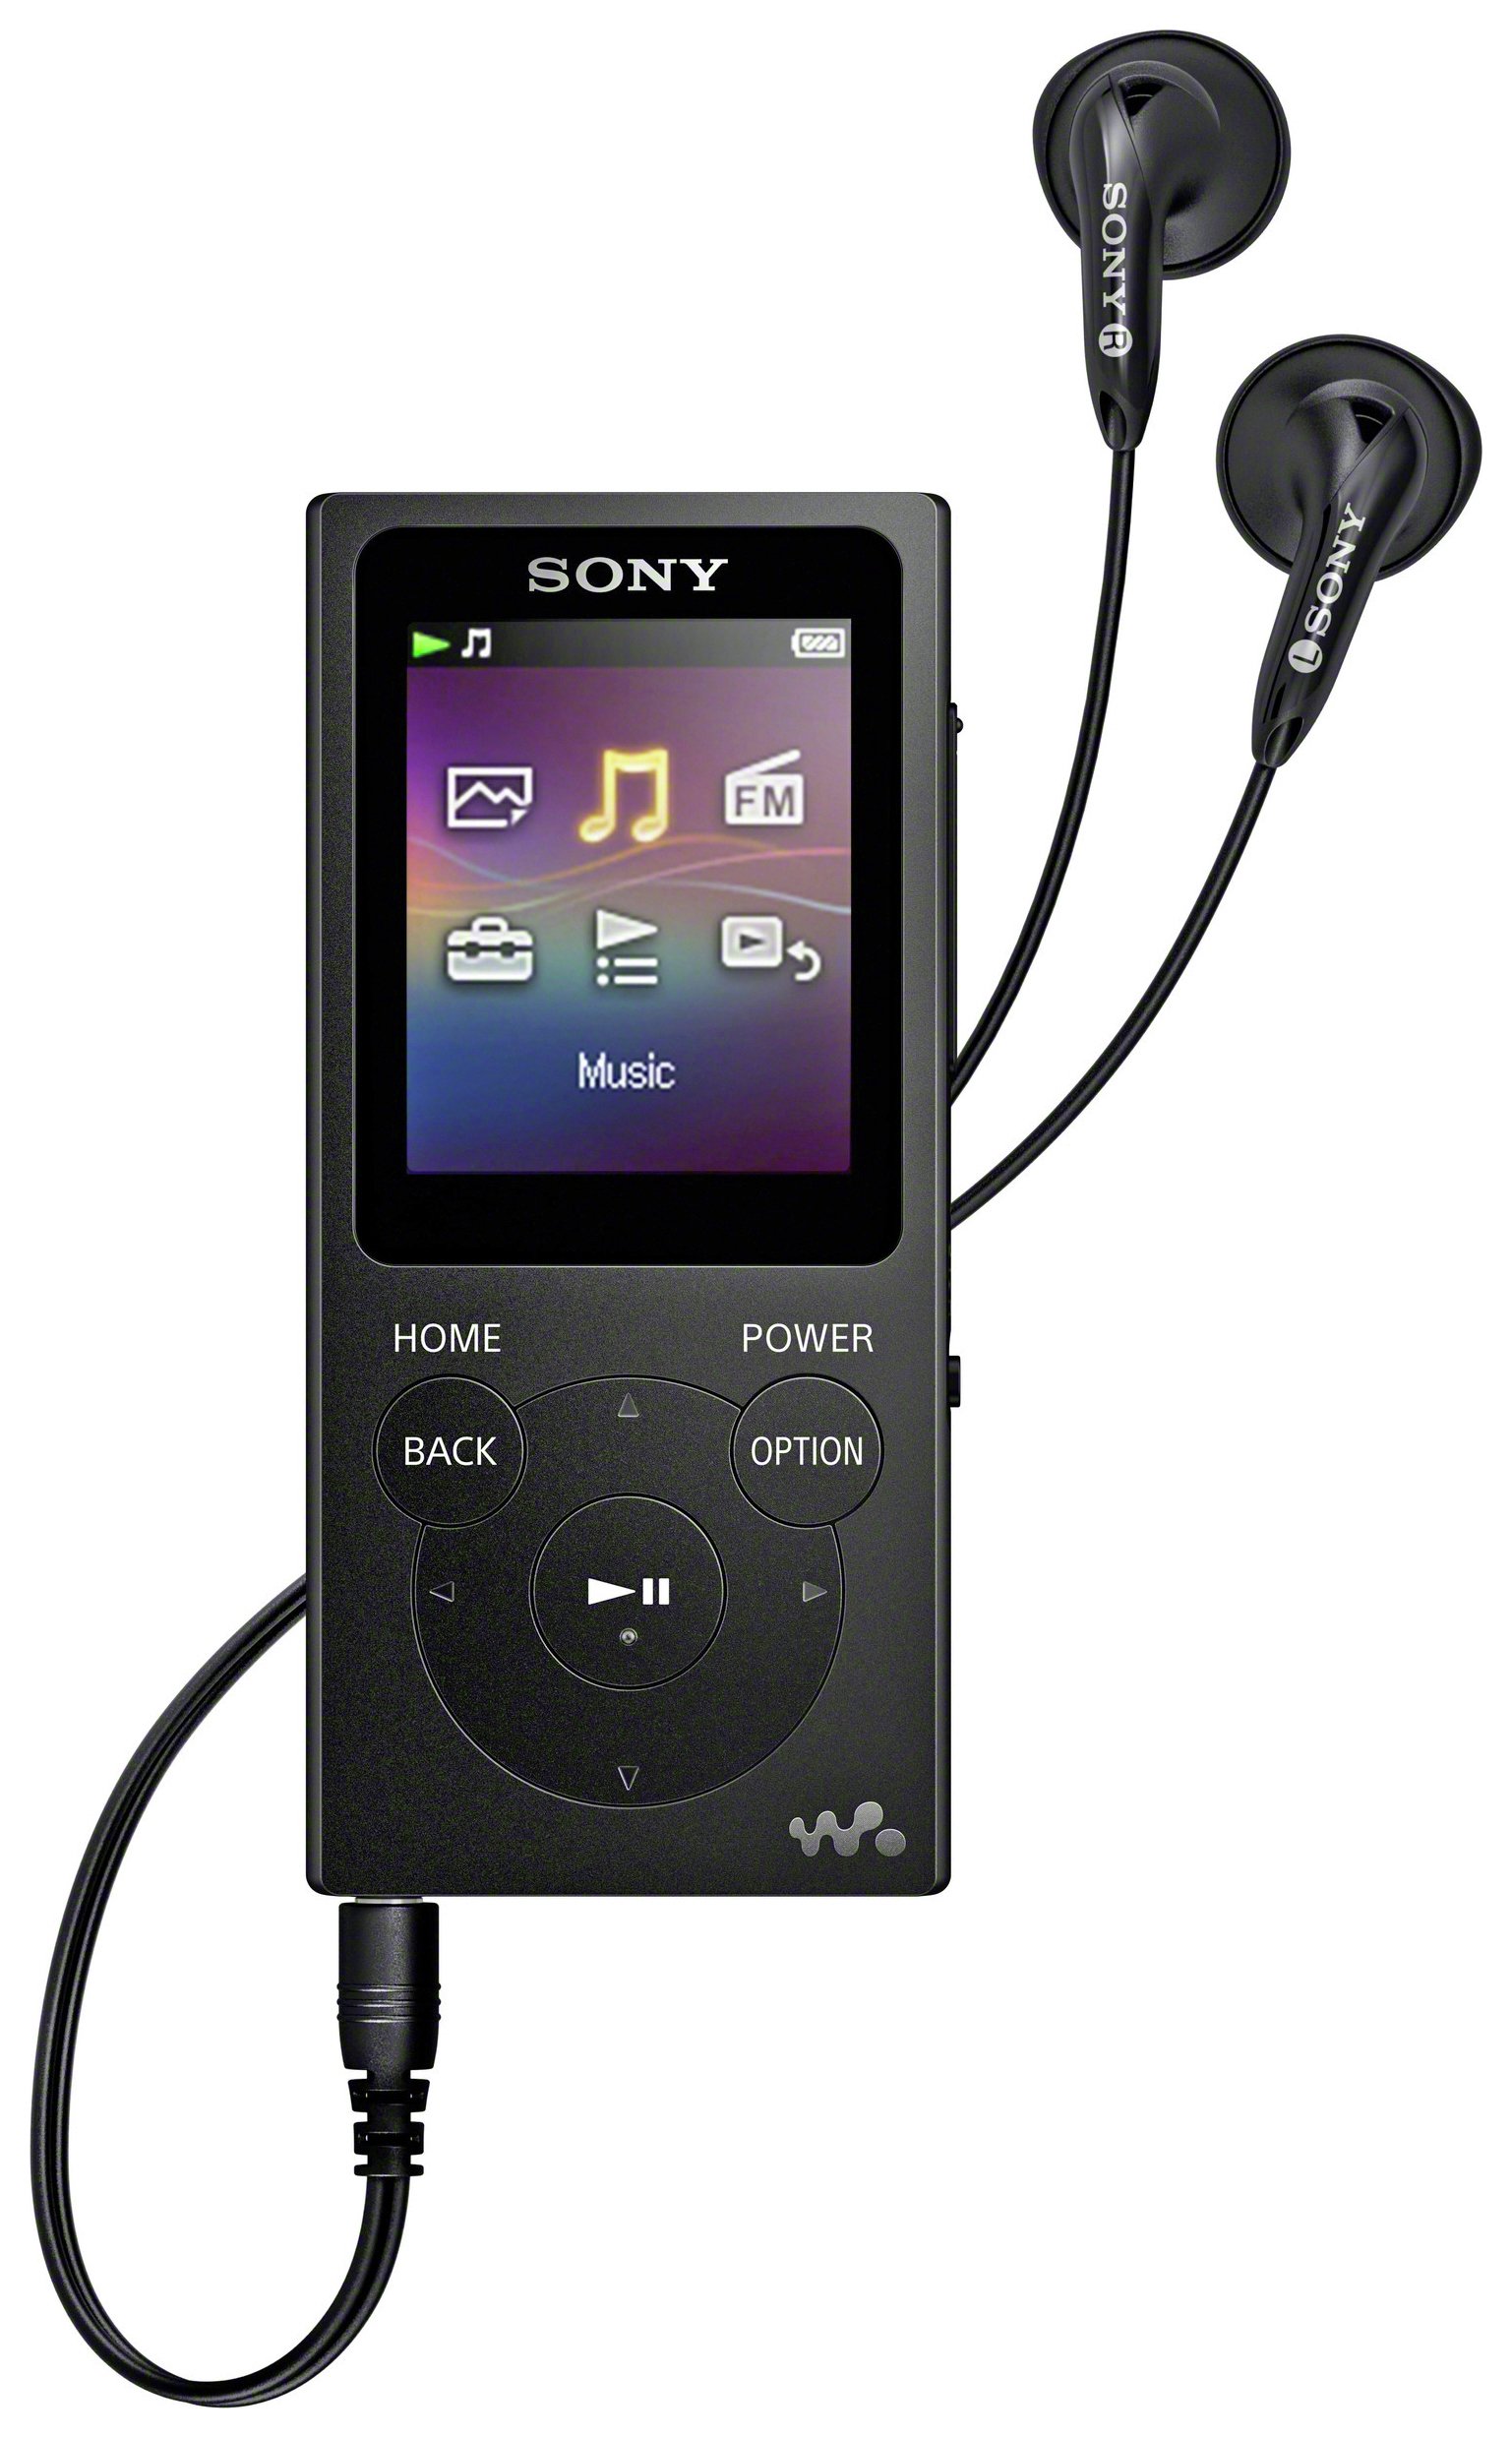 Sony NW-E394 Walkman 8GB MP3 Player Review